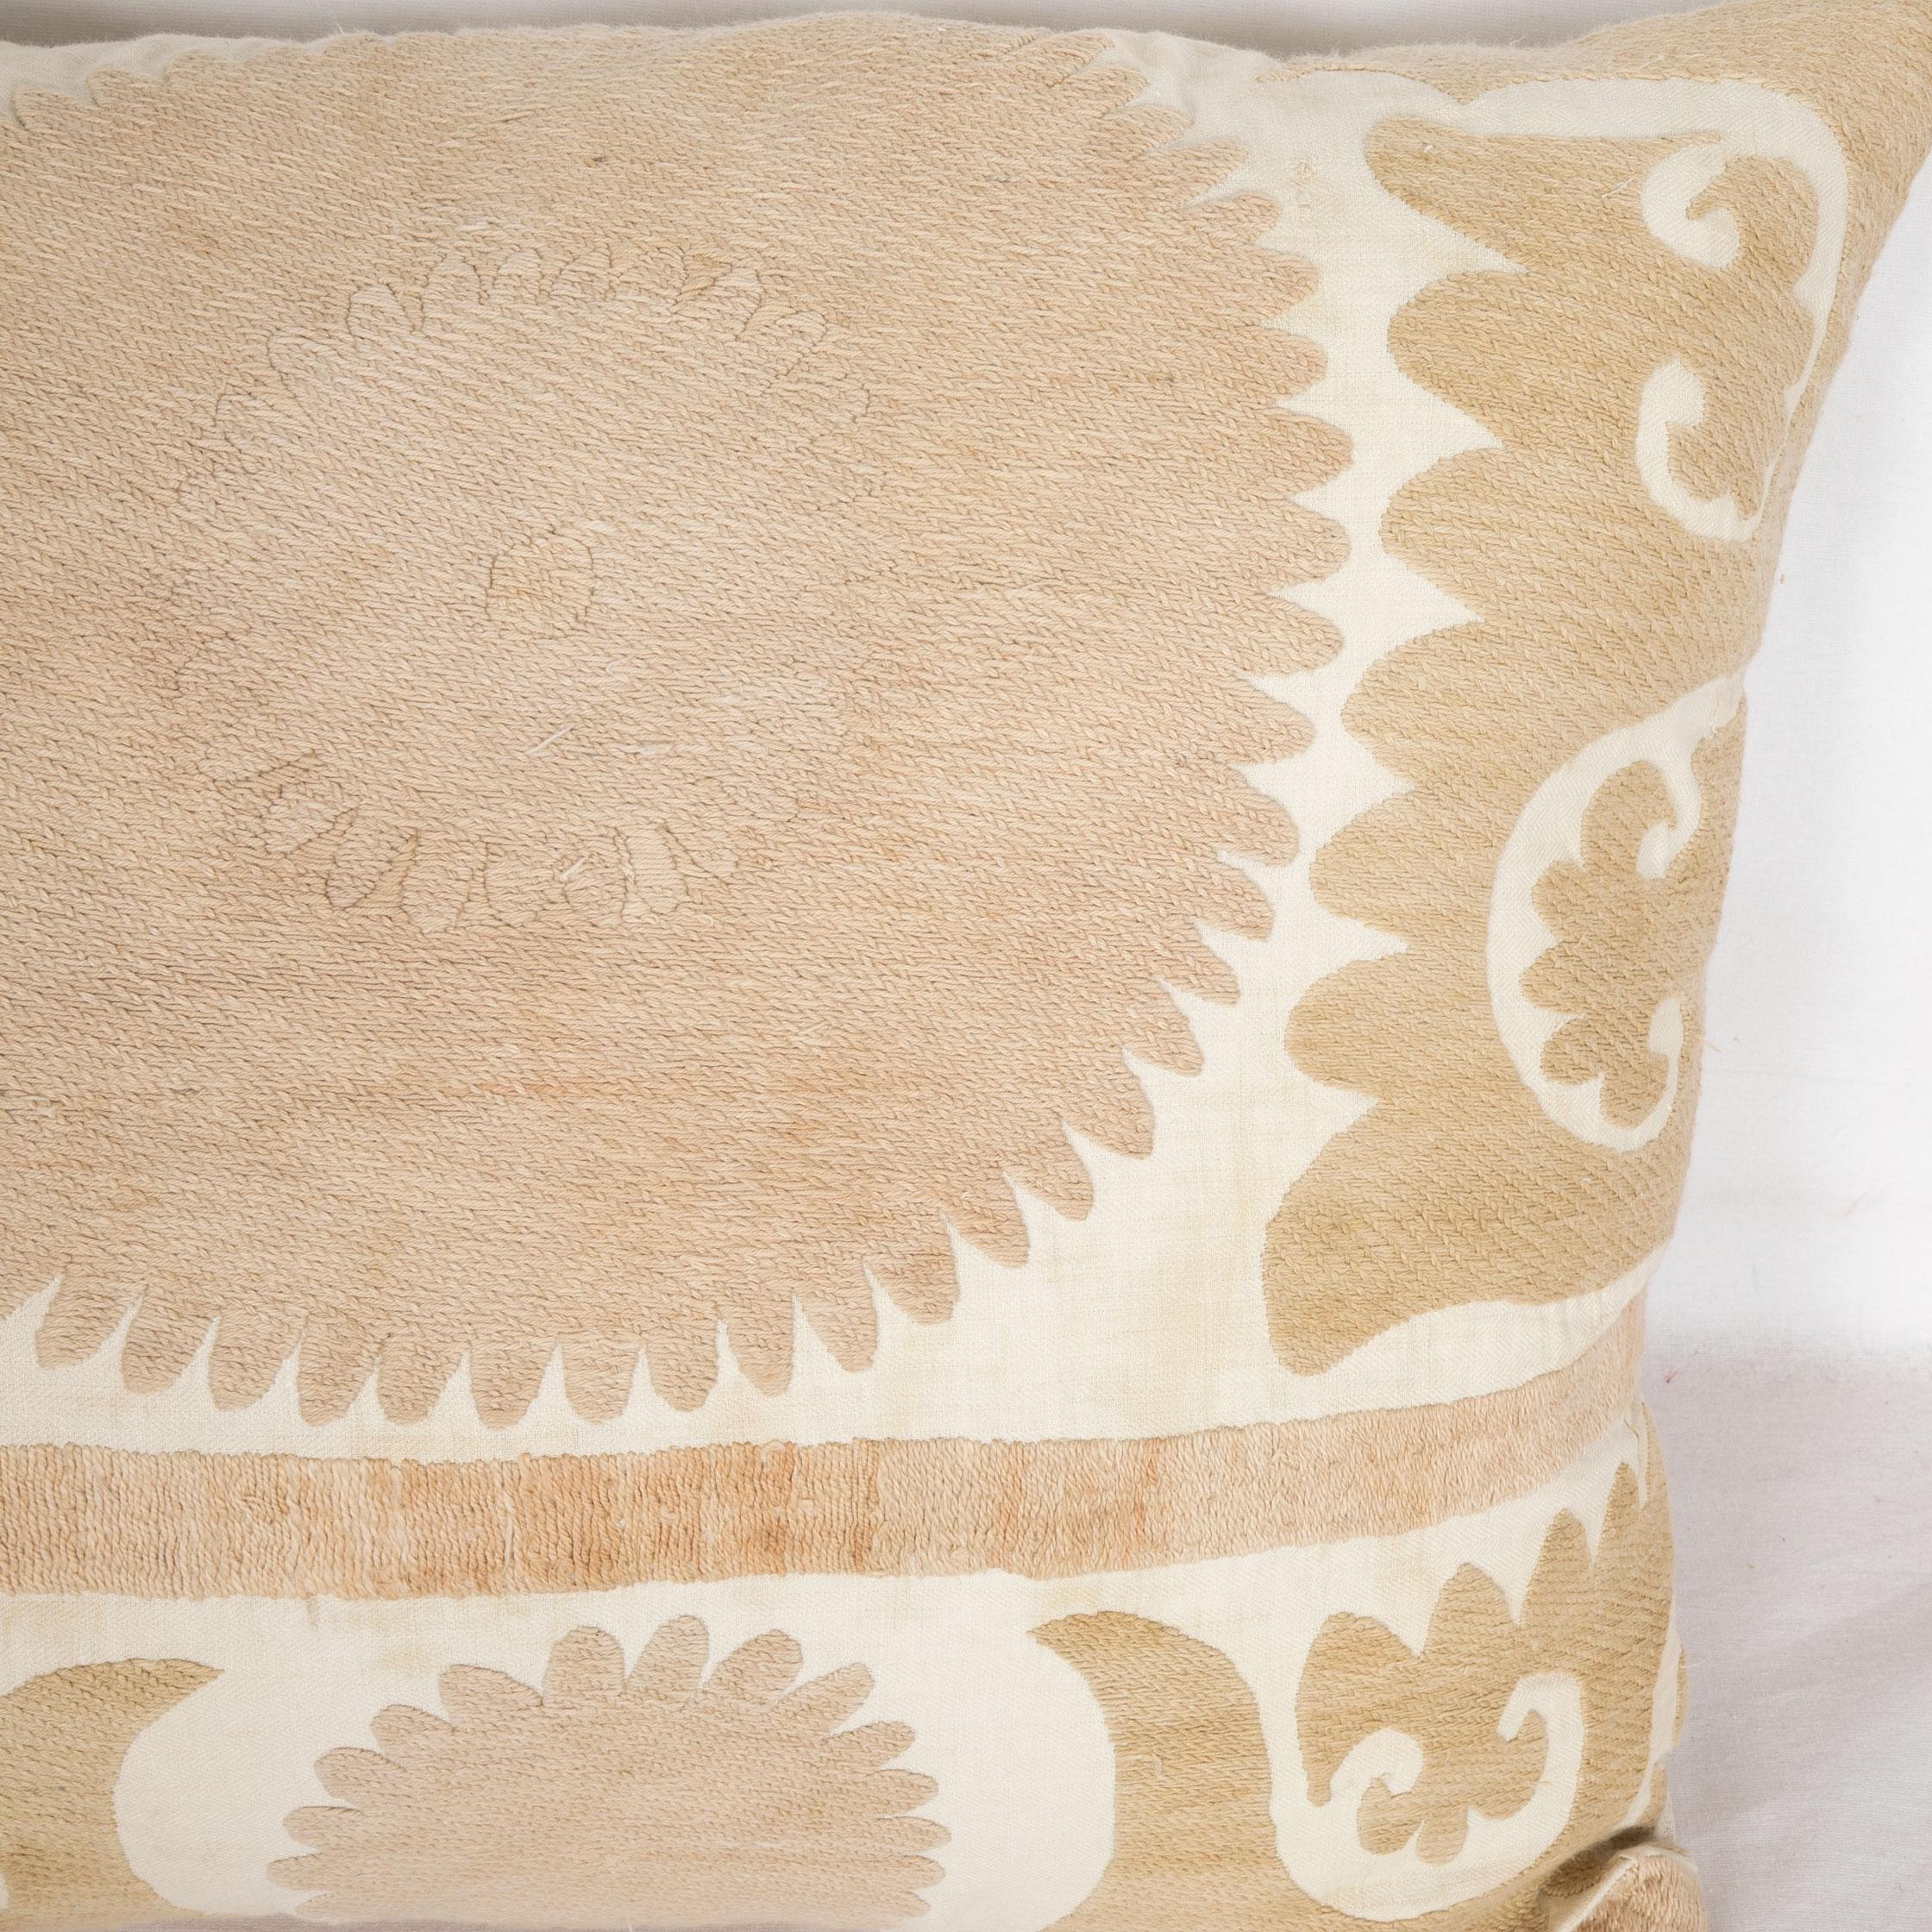 Cotton Suzani Pillow Case Fashioned from a Mid-20th Century Uzbek Suzani